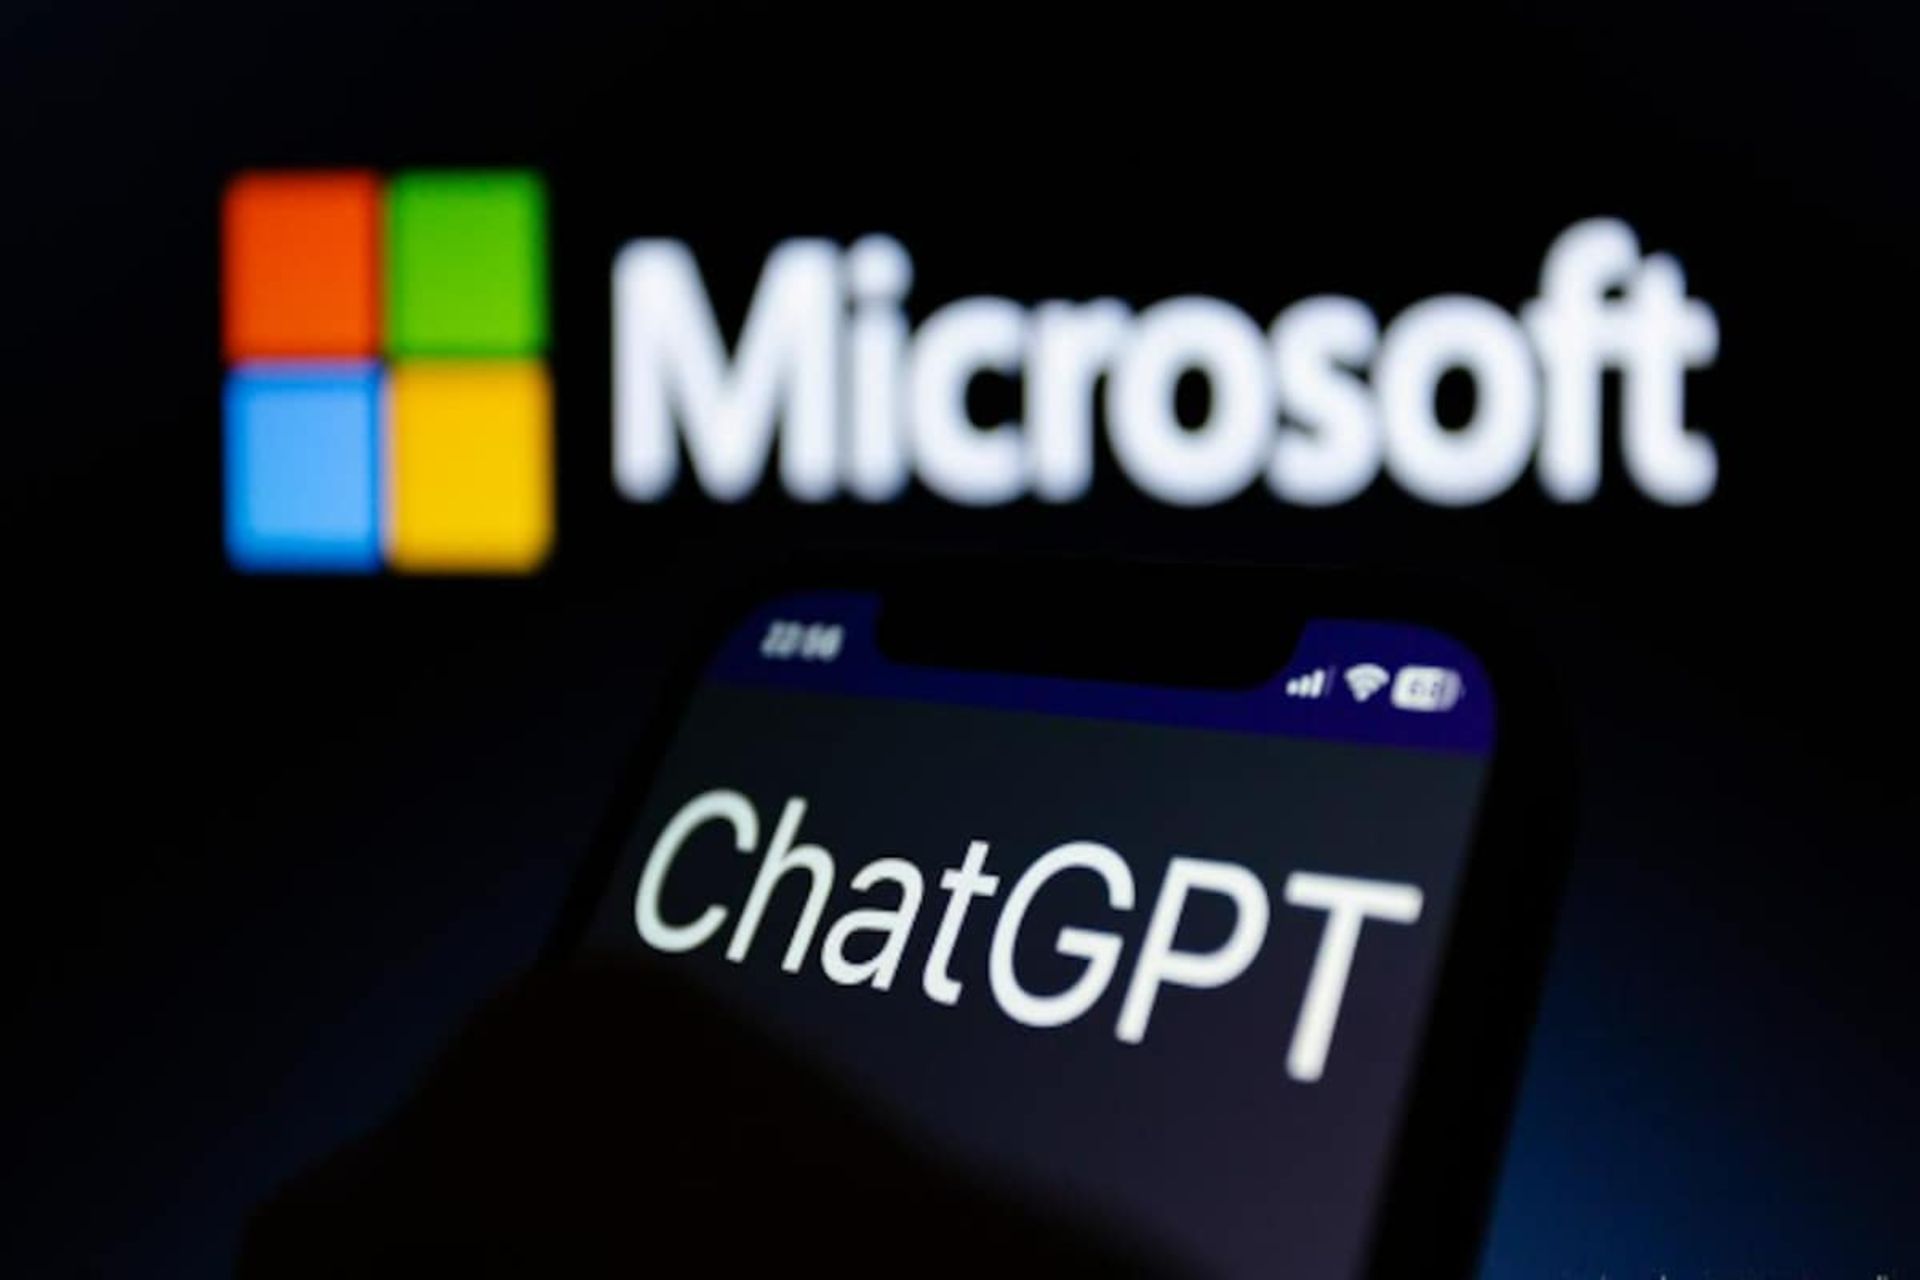 لوگوی مایکروسافت در کنار لوگوی ChatGPT